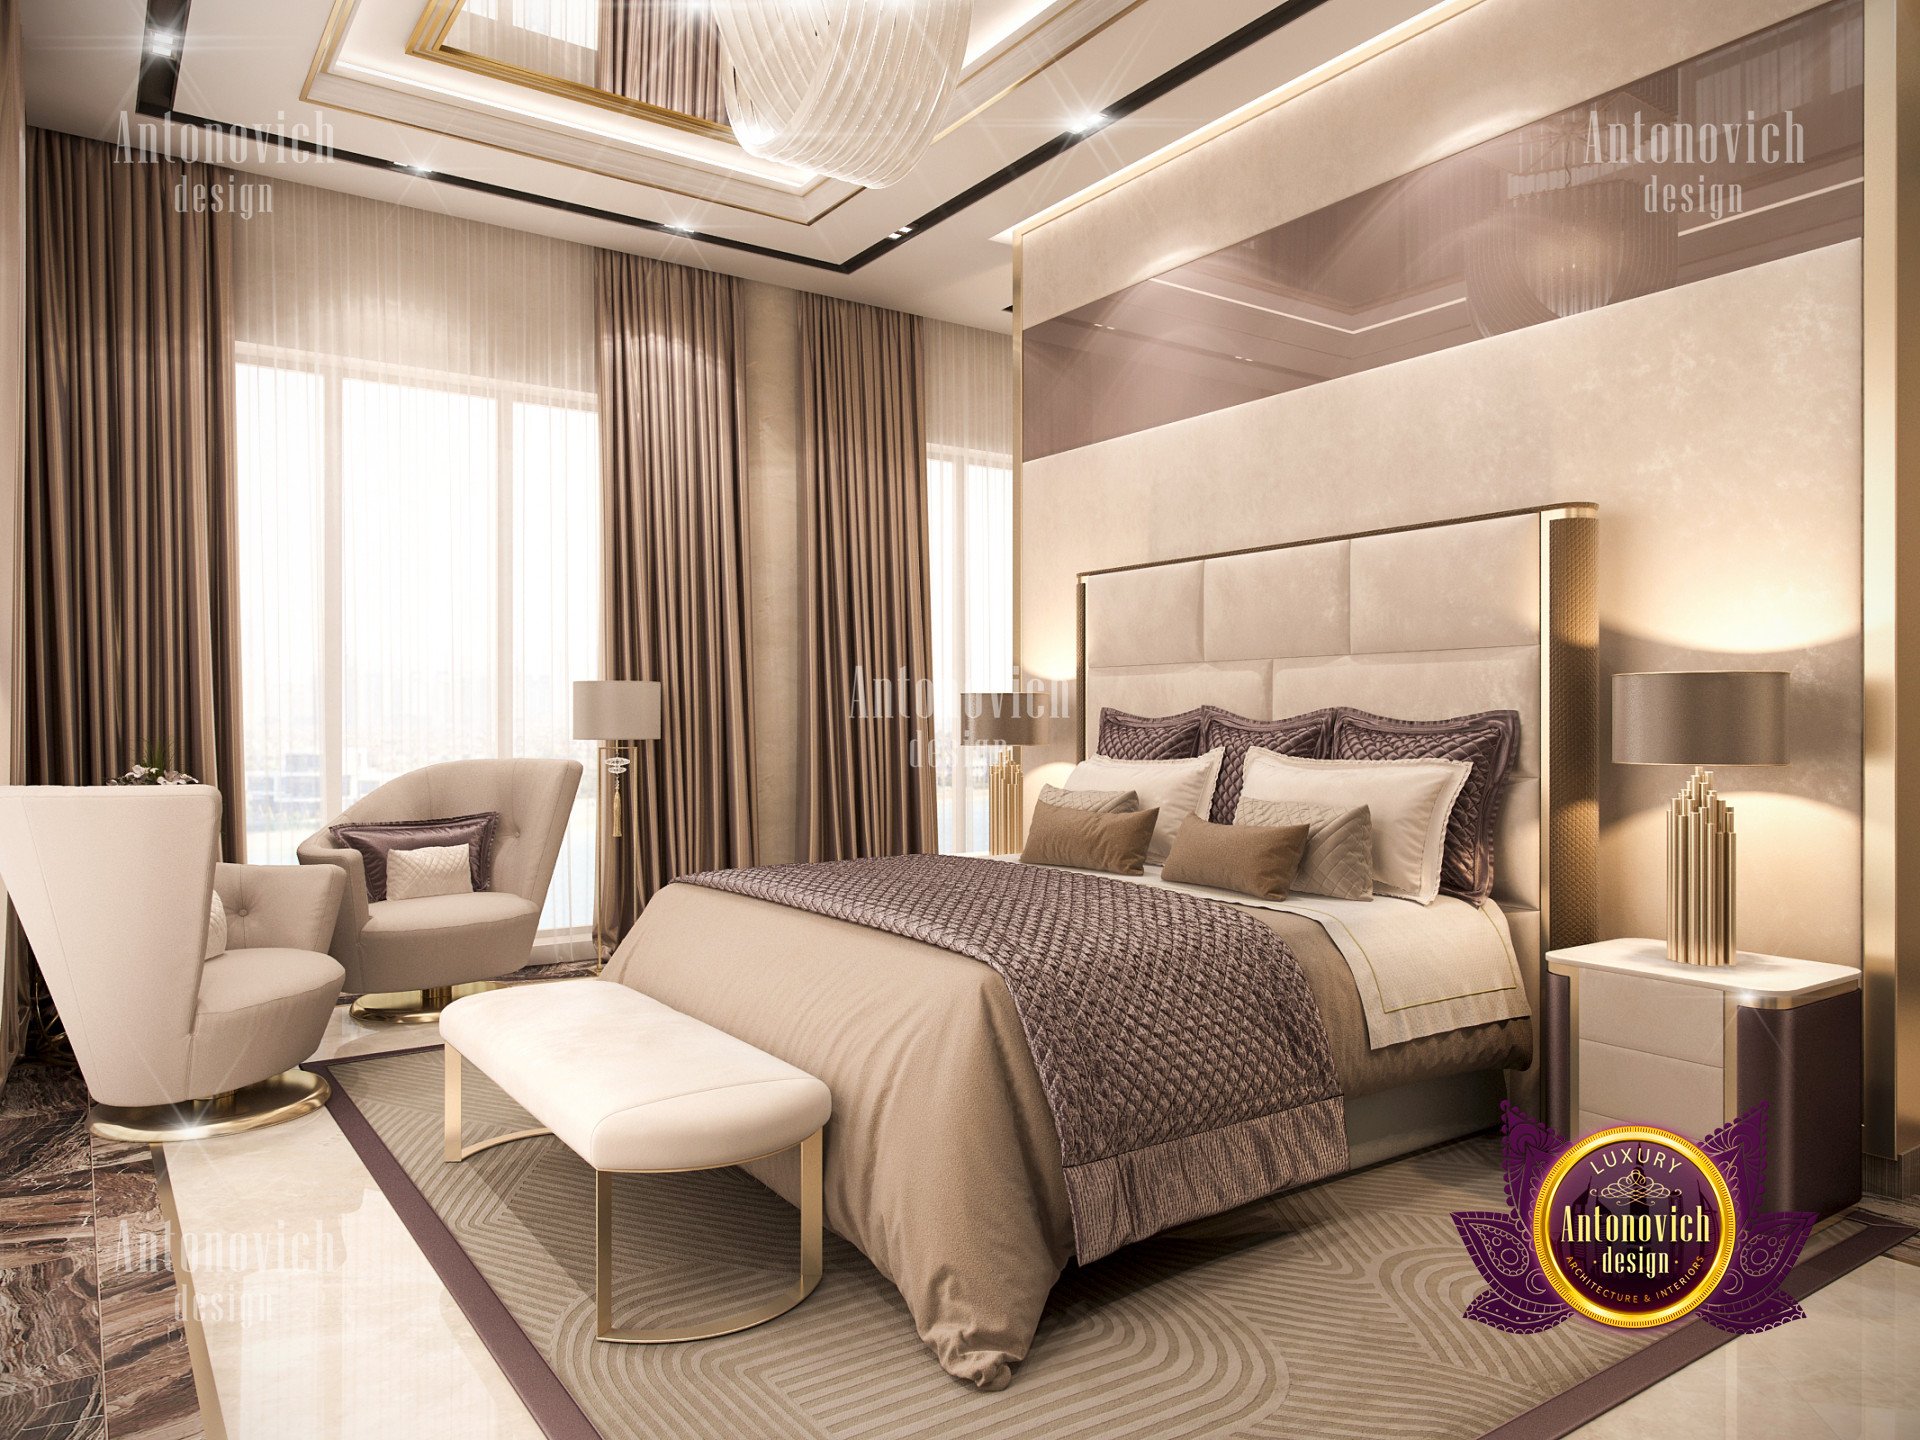 Nice bedroom interior - luxury interior design company in ...